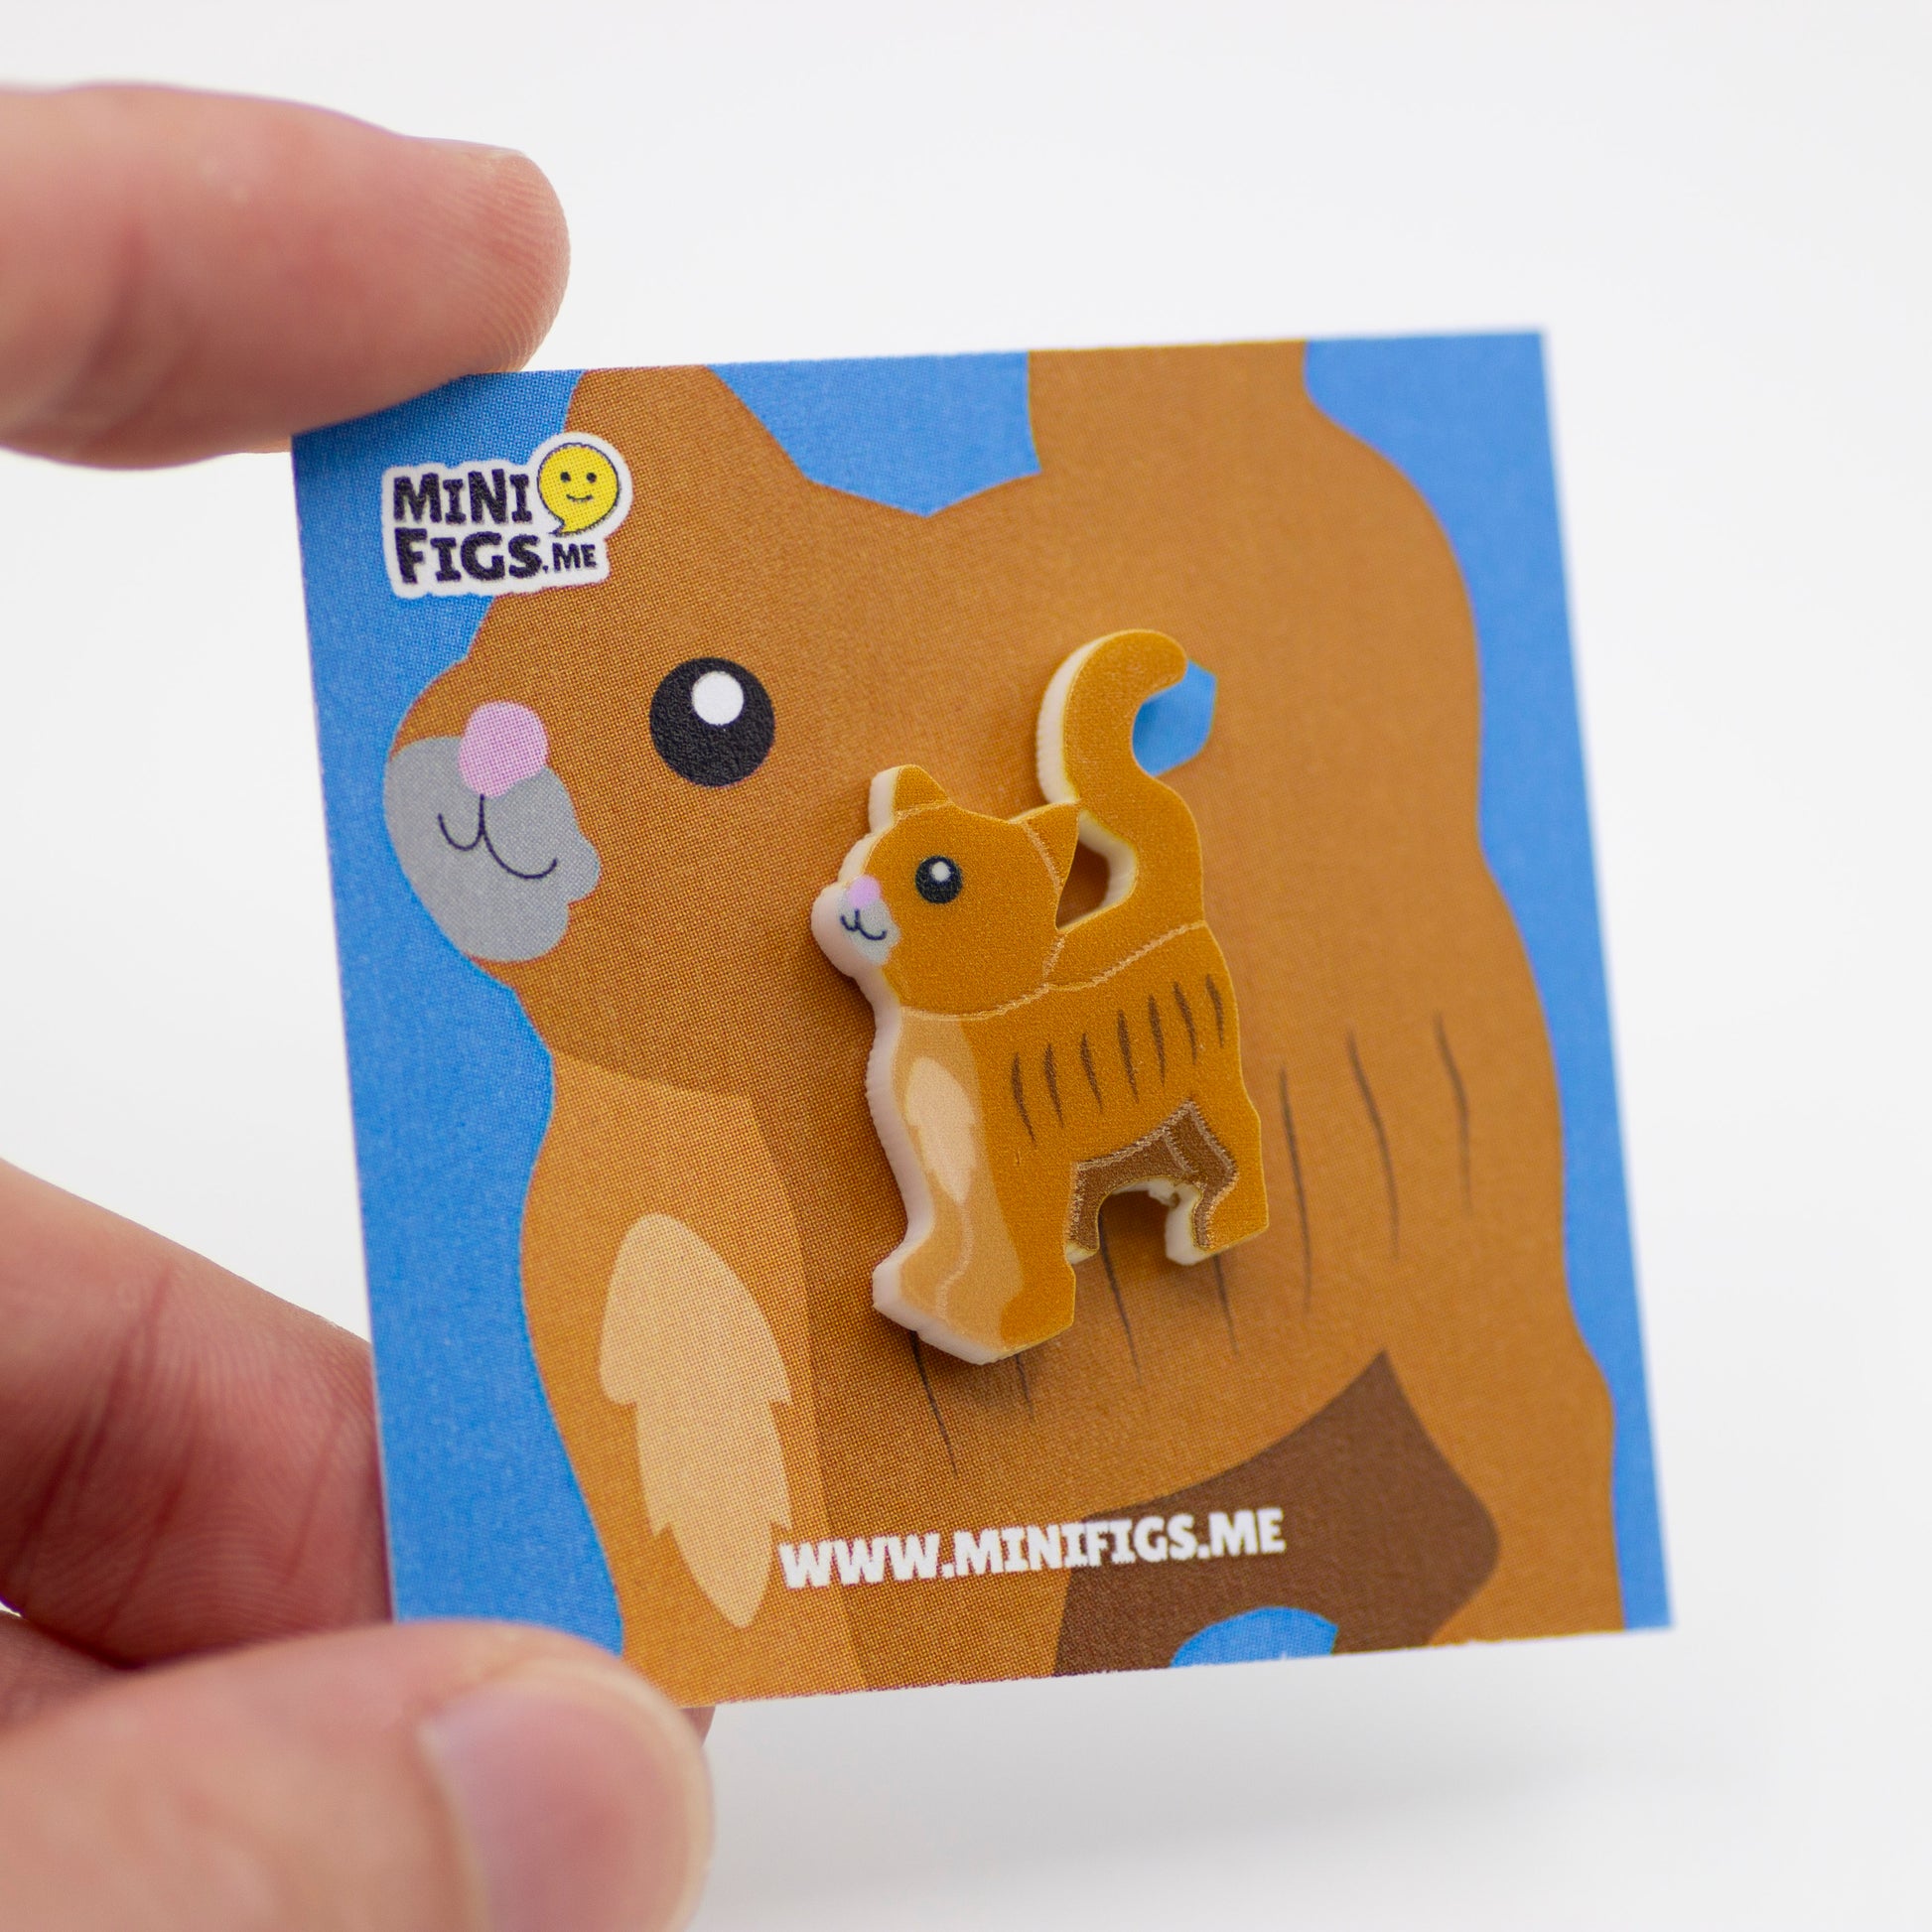 LEGO Cat Pin Badge - Acrylic Pin Badge Accessory